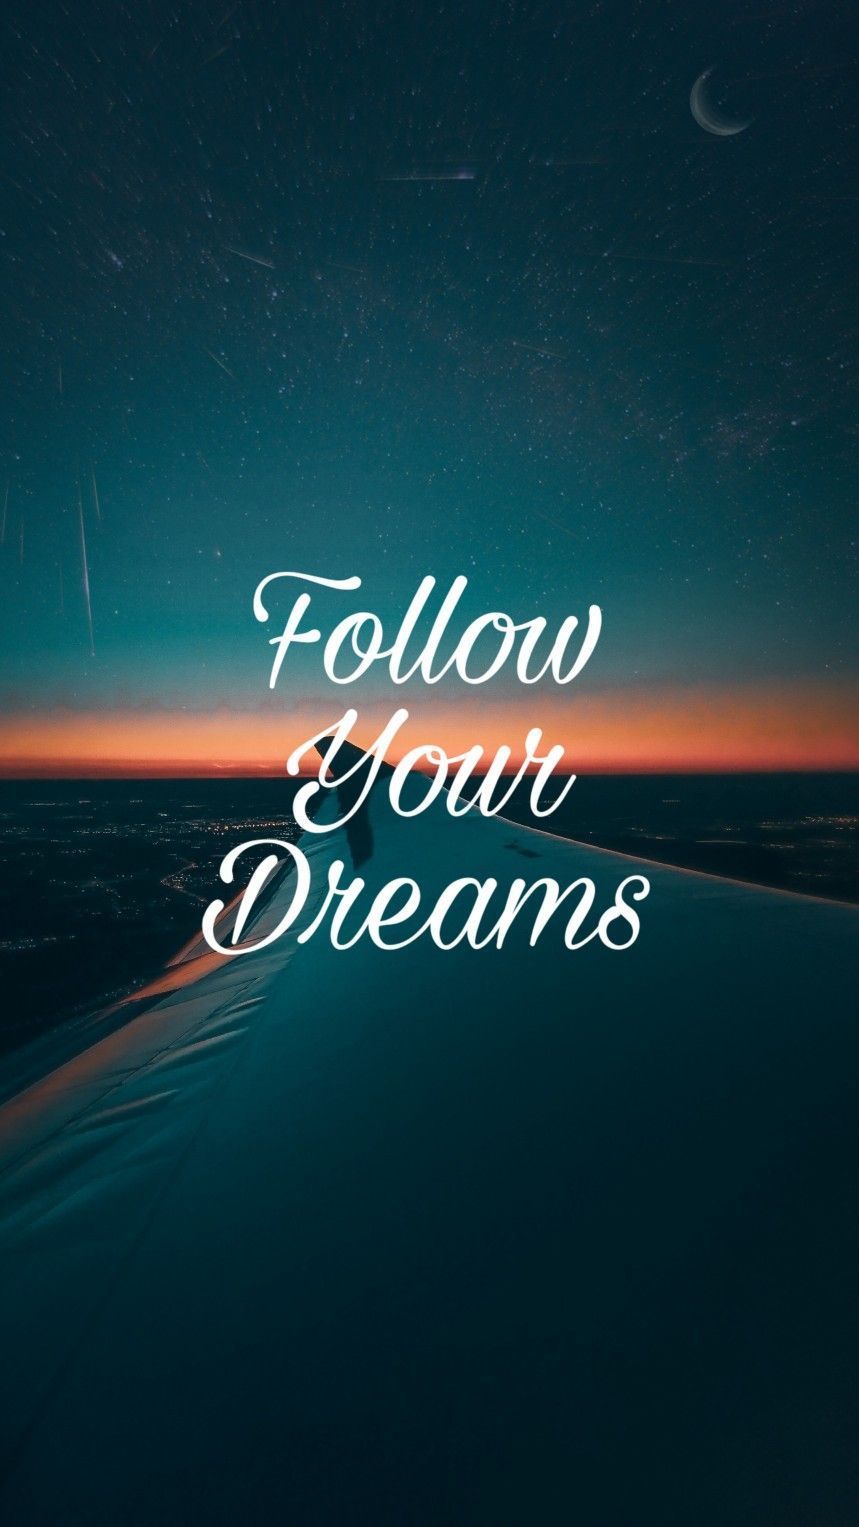 follow your dreams- follow your dreams -#NiceWordschildren #NiceWordsi. Wallpaper quotes, iPhone wallpaper quotes inspirational, Inspirational quotes wallpaper